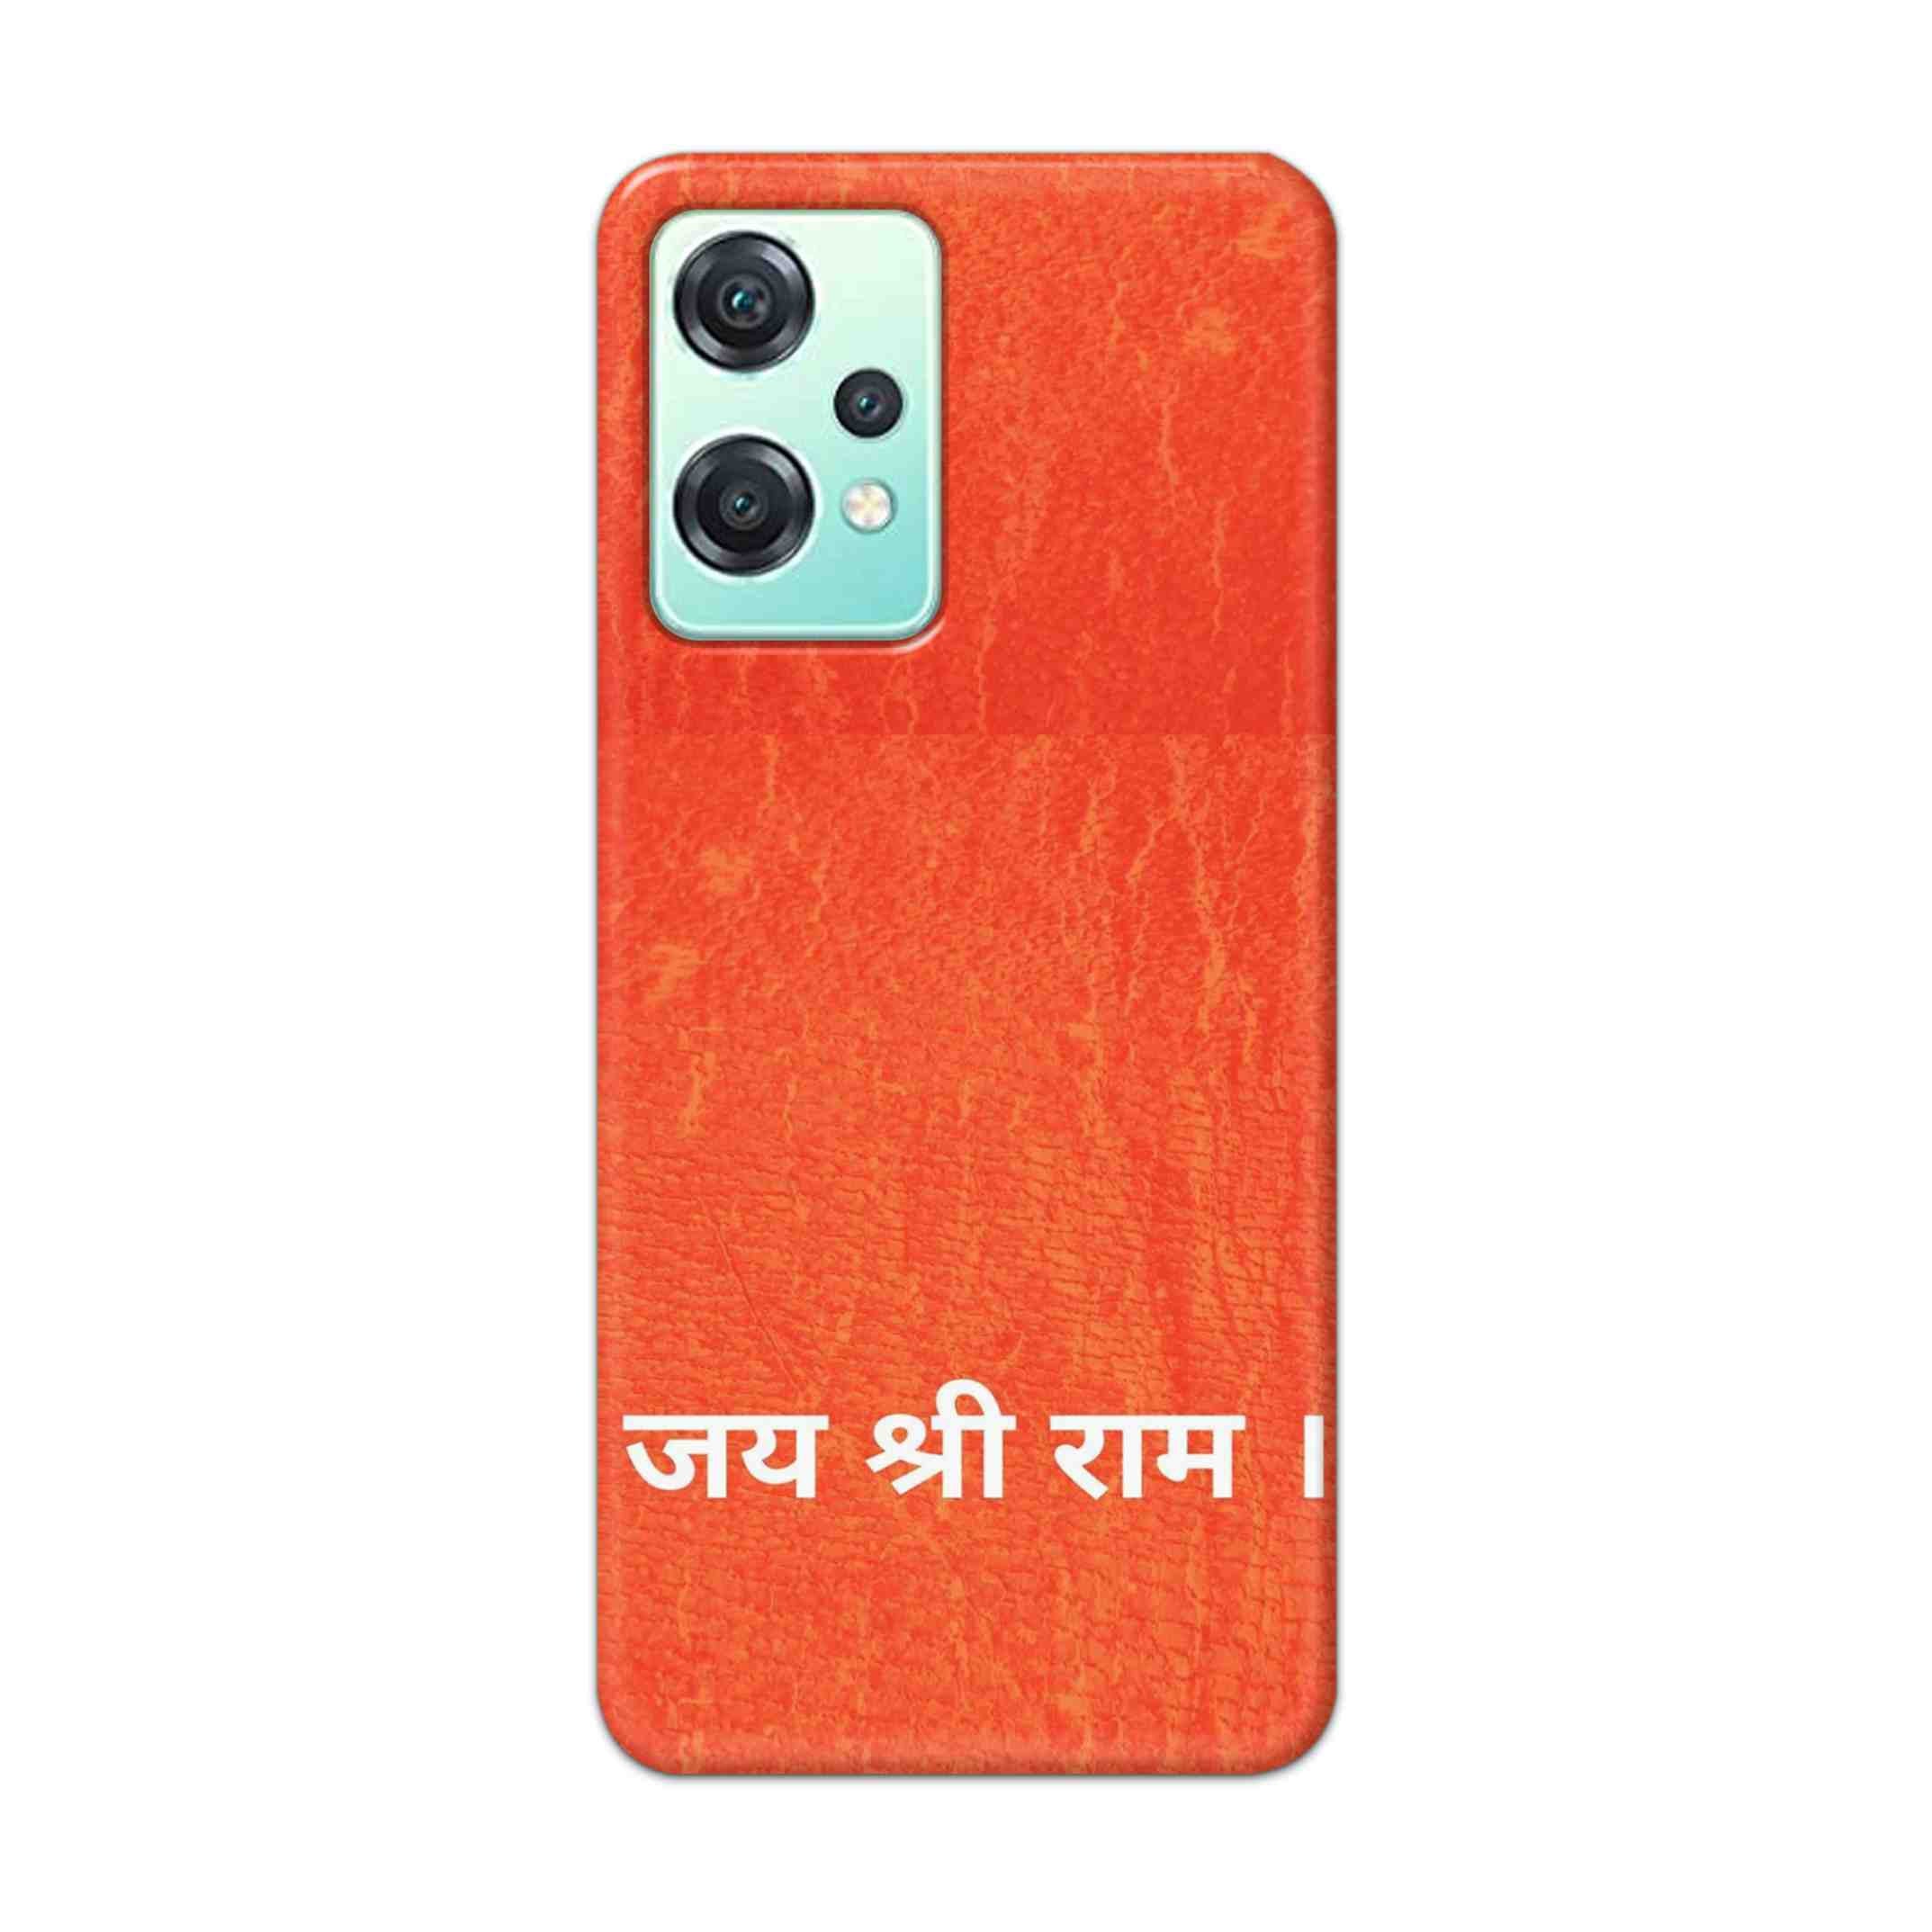 Buy Jai Shree Ram Hard Back Mobile Phone Case Cover For OnePlus Nord CE 2 Lite 5G Online